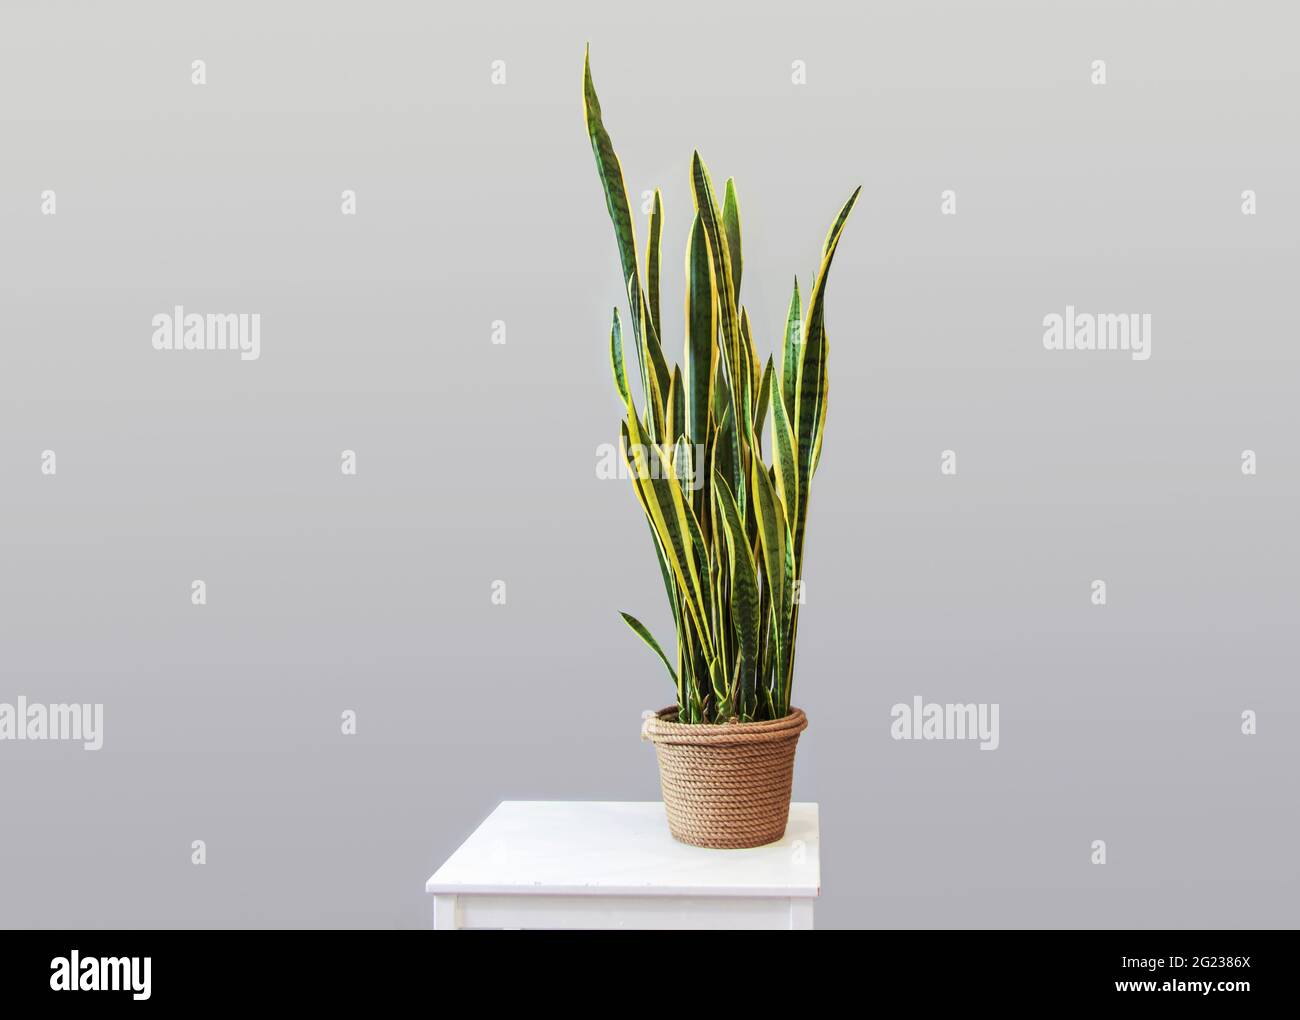 Potted plant sansevieria on a gray background home decor copy space Kinfolk style decoration Stock Photo